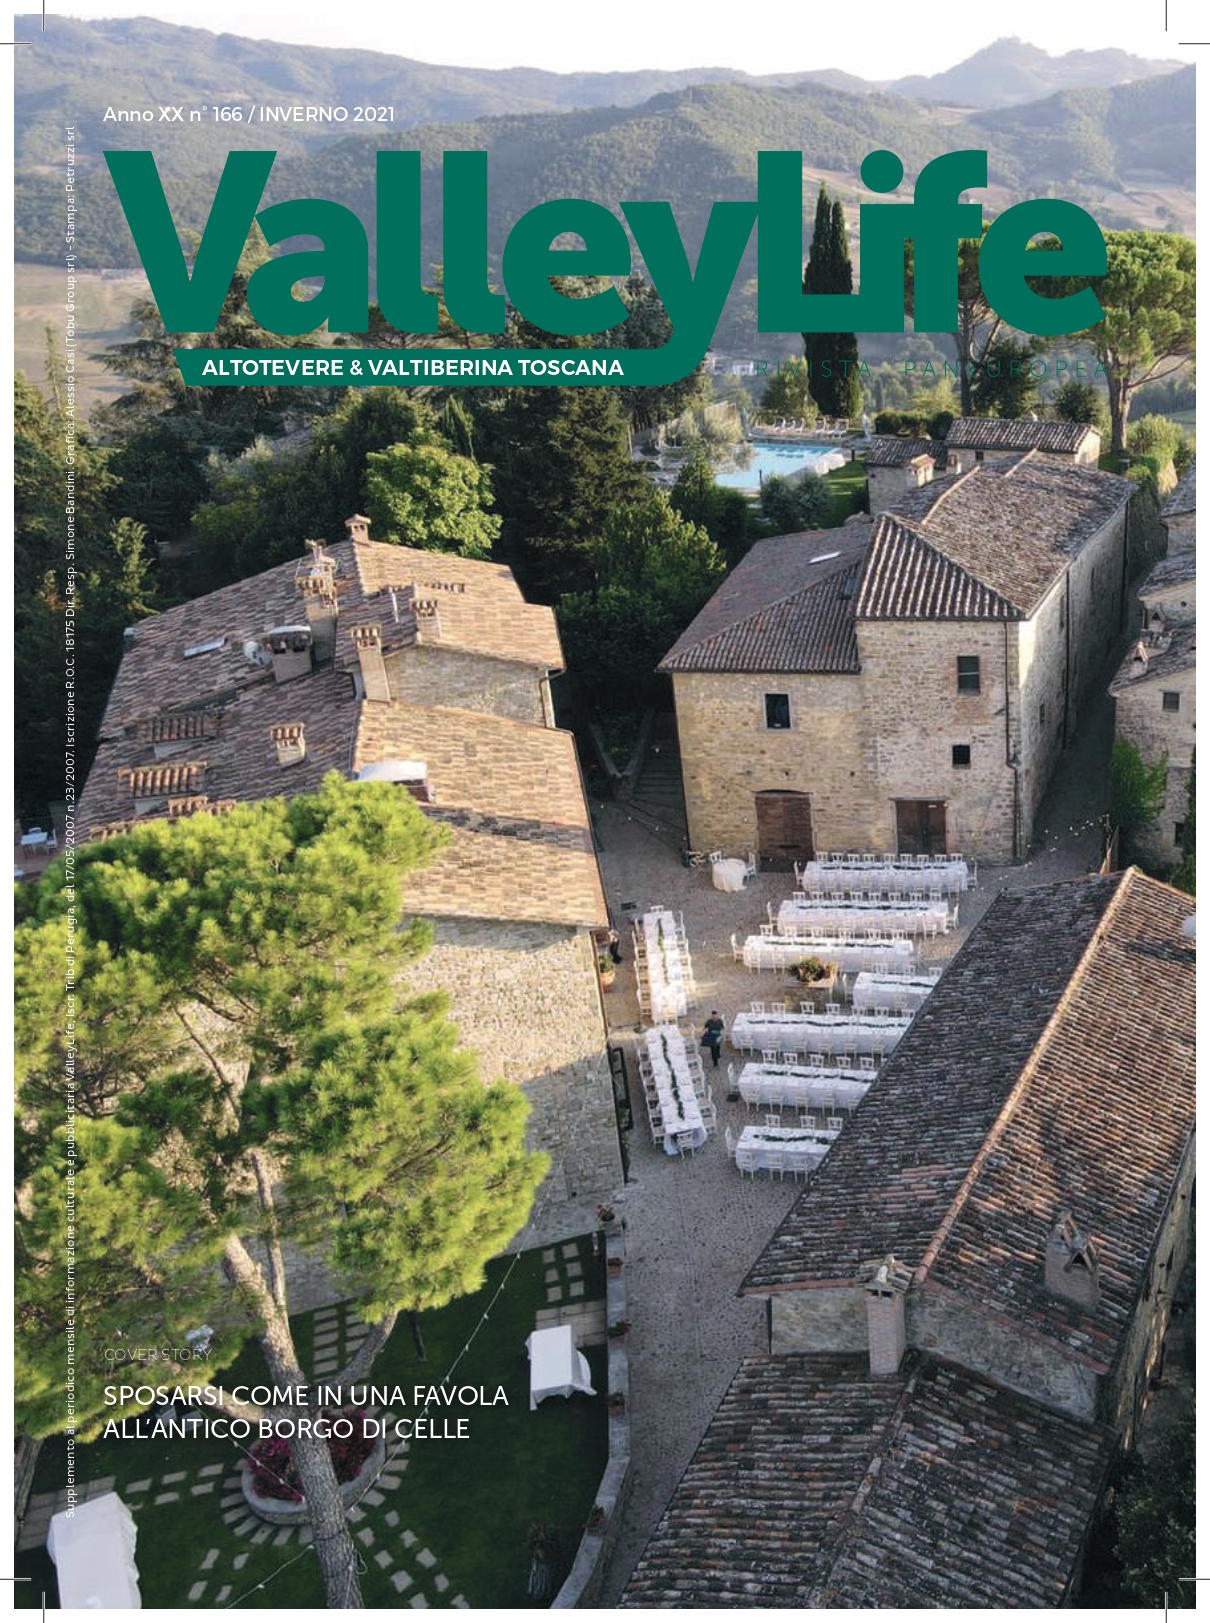 VL Alto Tevere e Valtiberina Toscana winter 2021/22